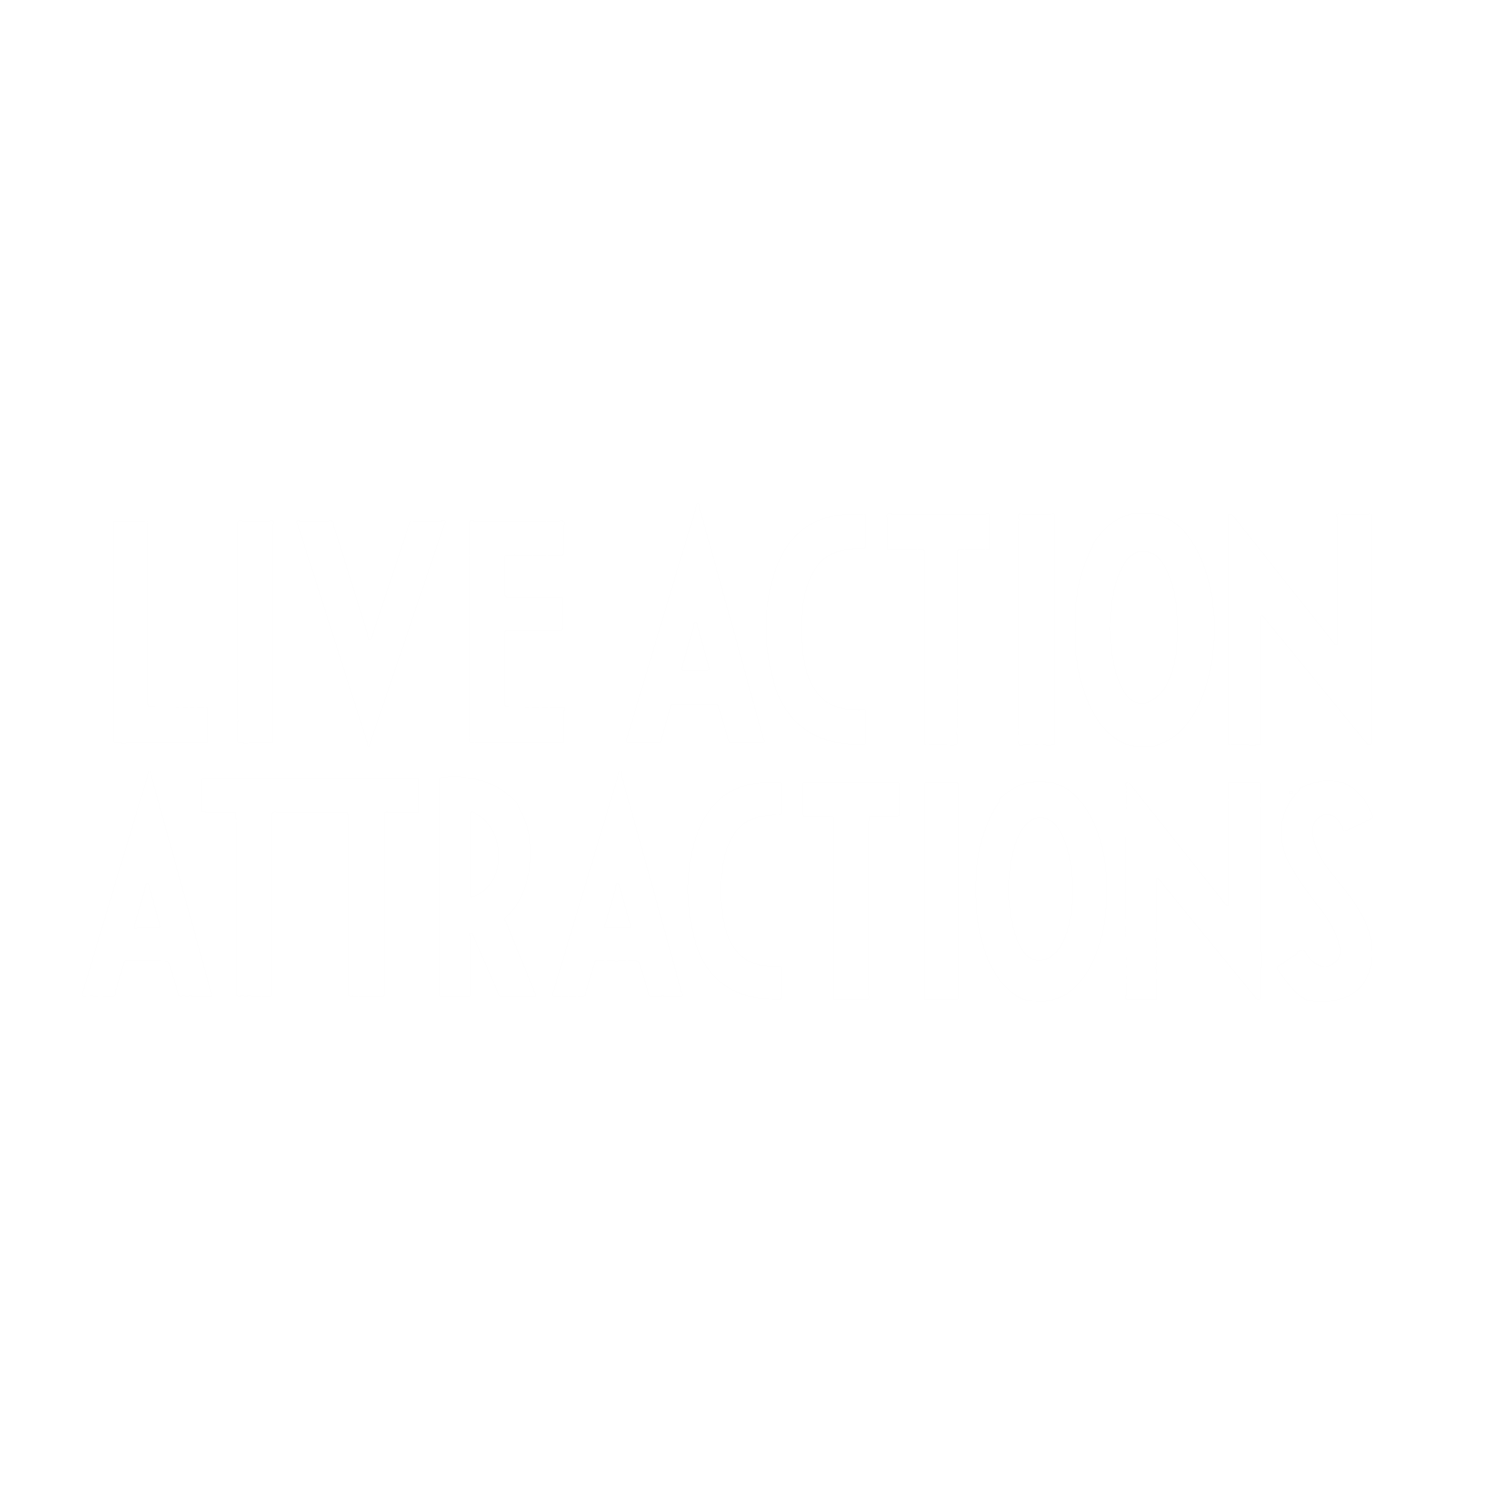 LiveActionAttractions.png